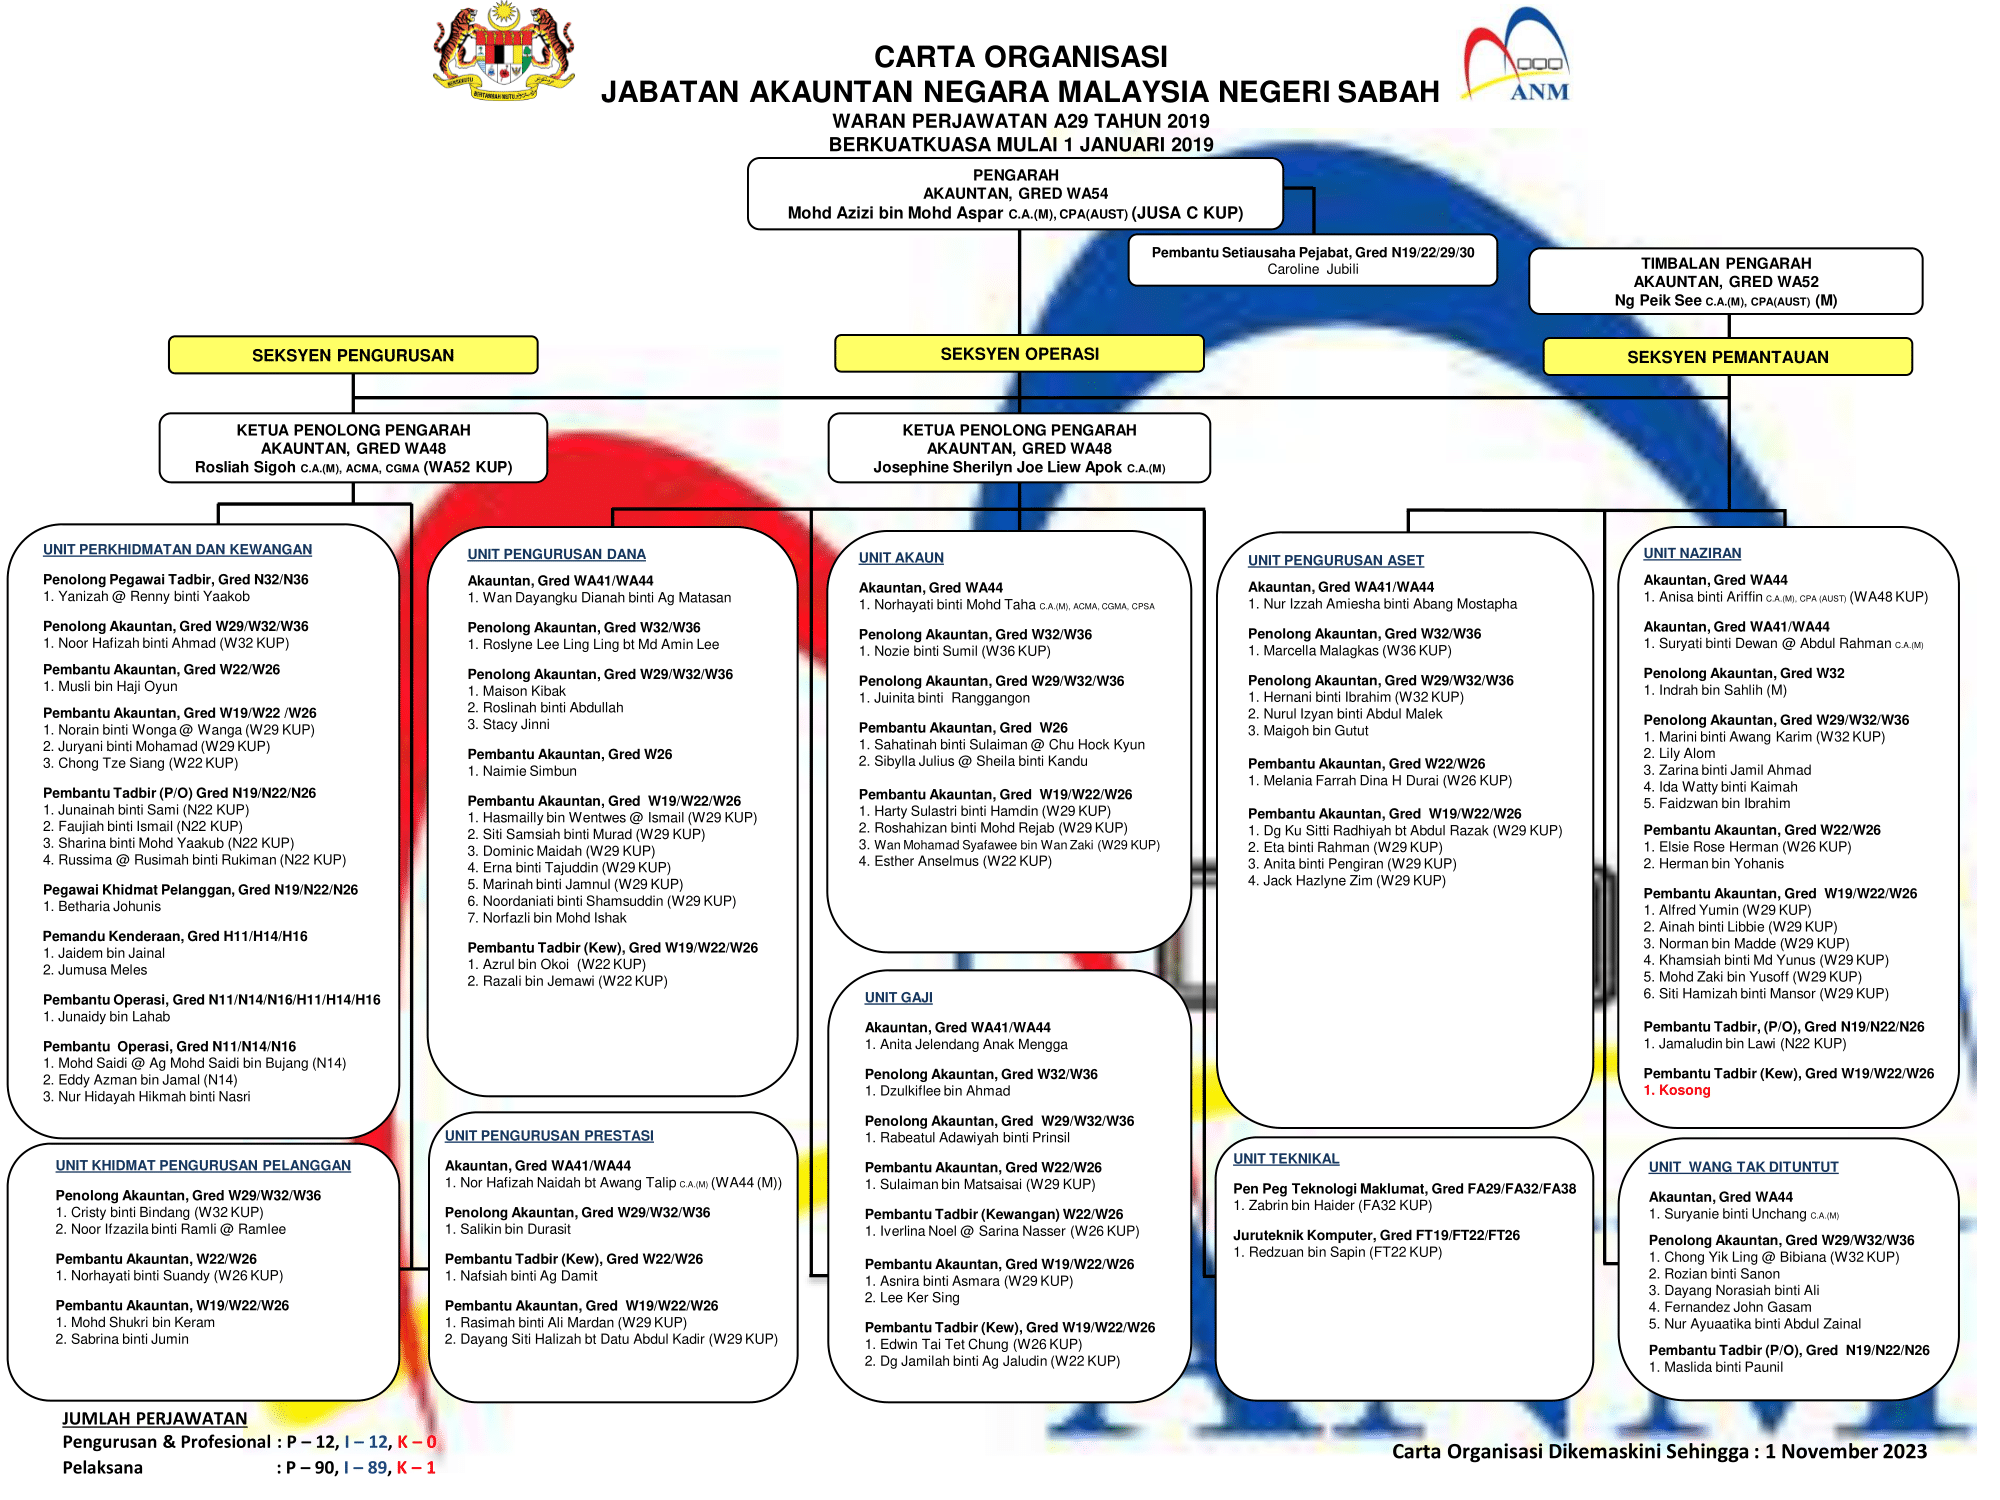 Carta Organisasi JANM Sabah 1 November 2023